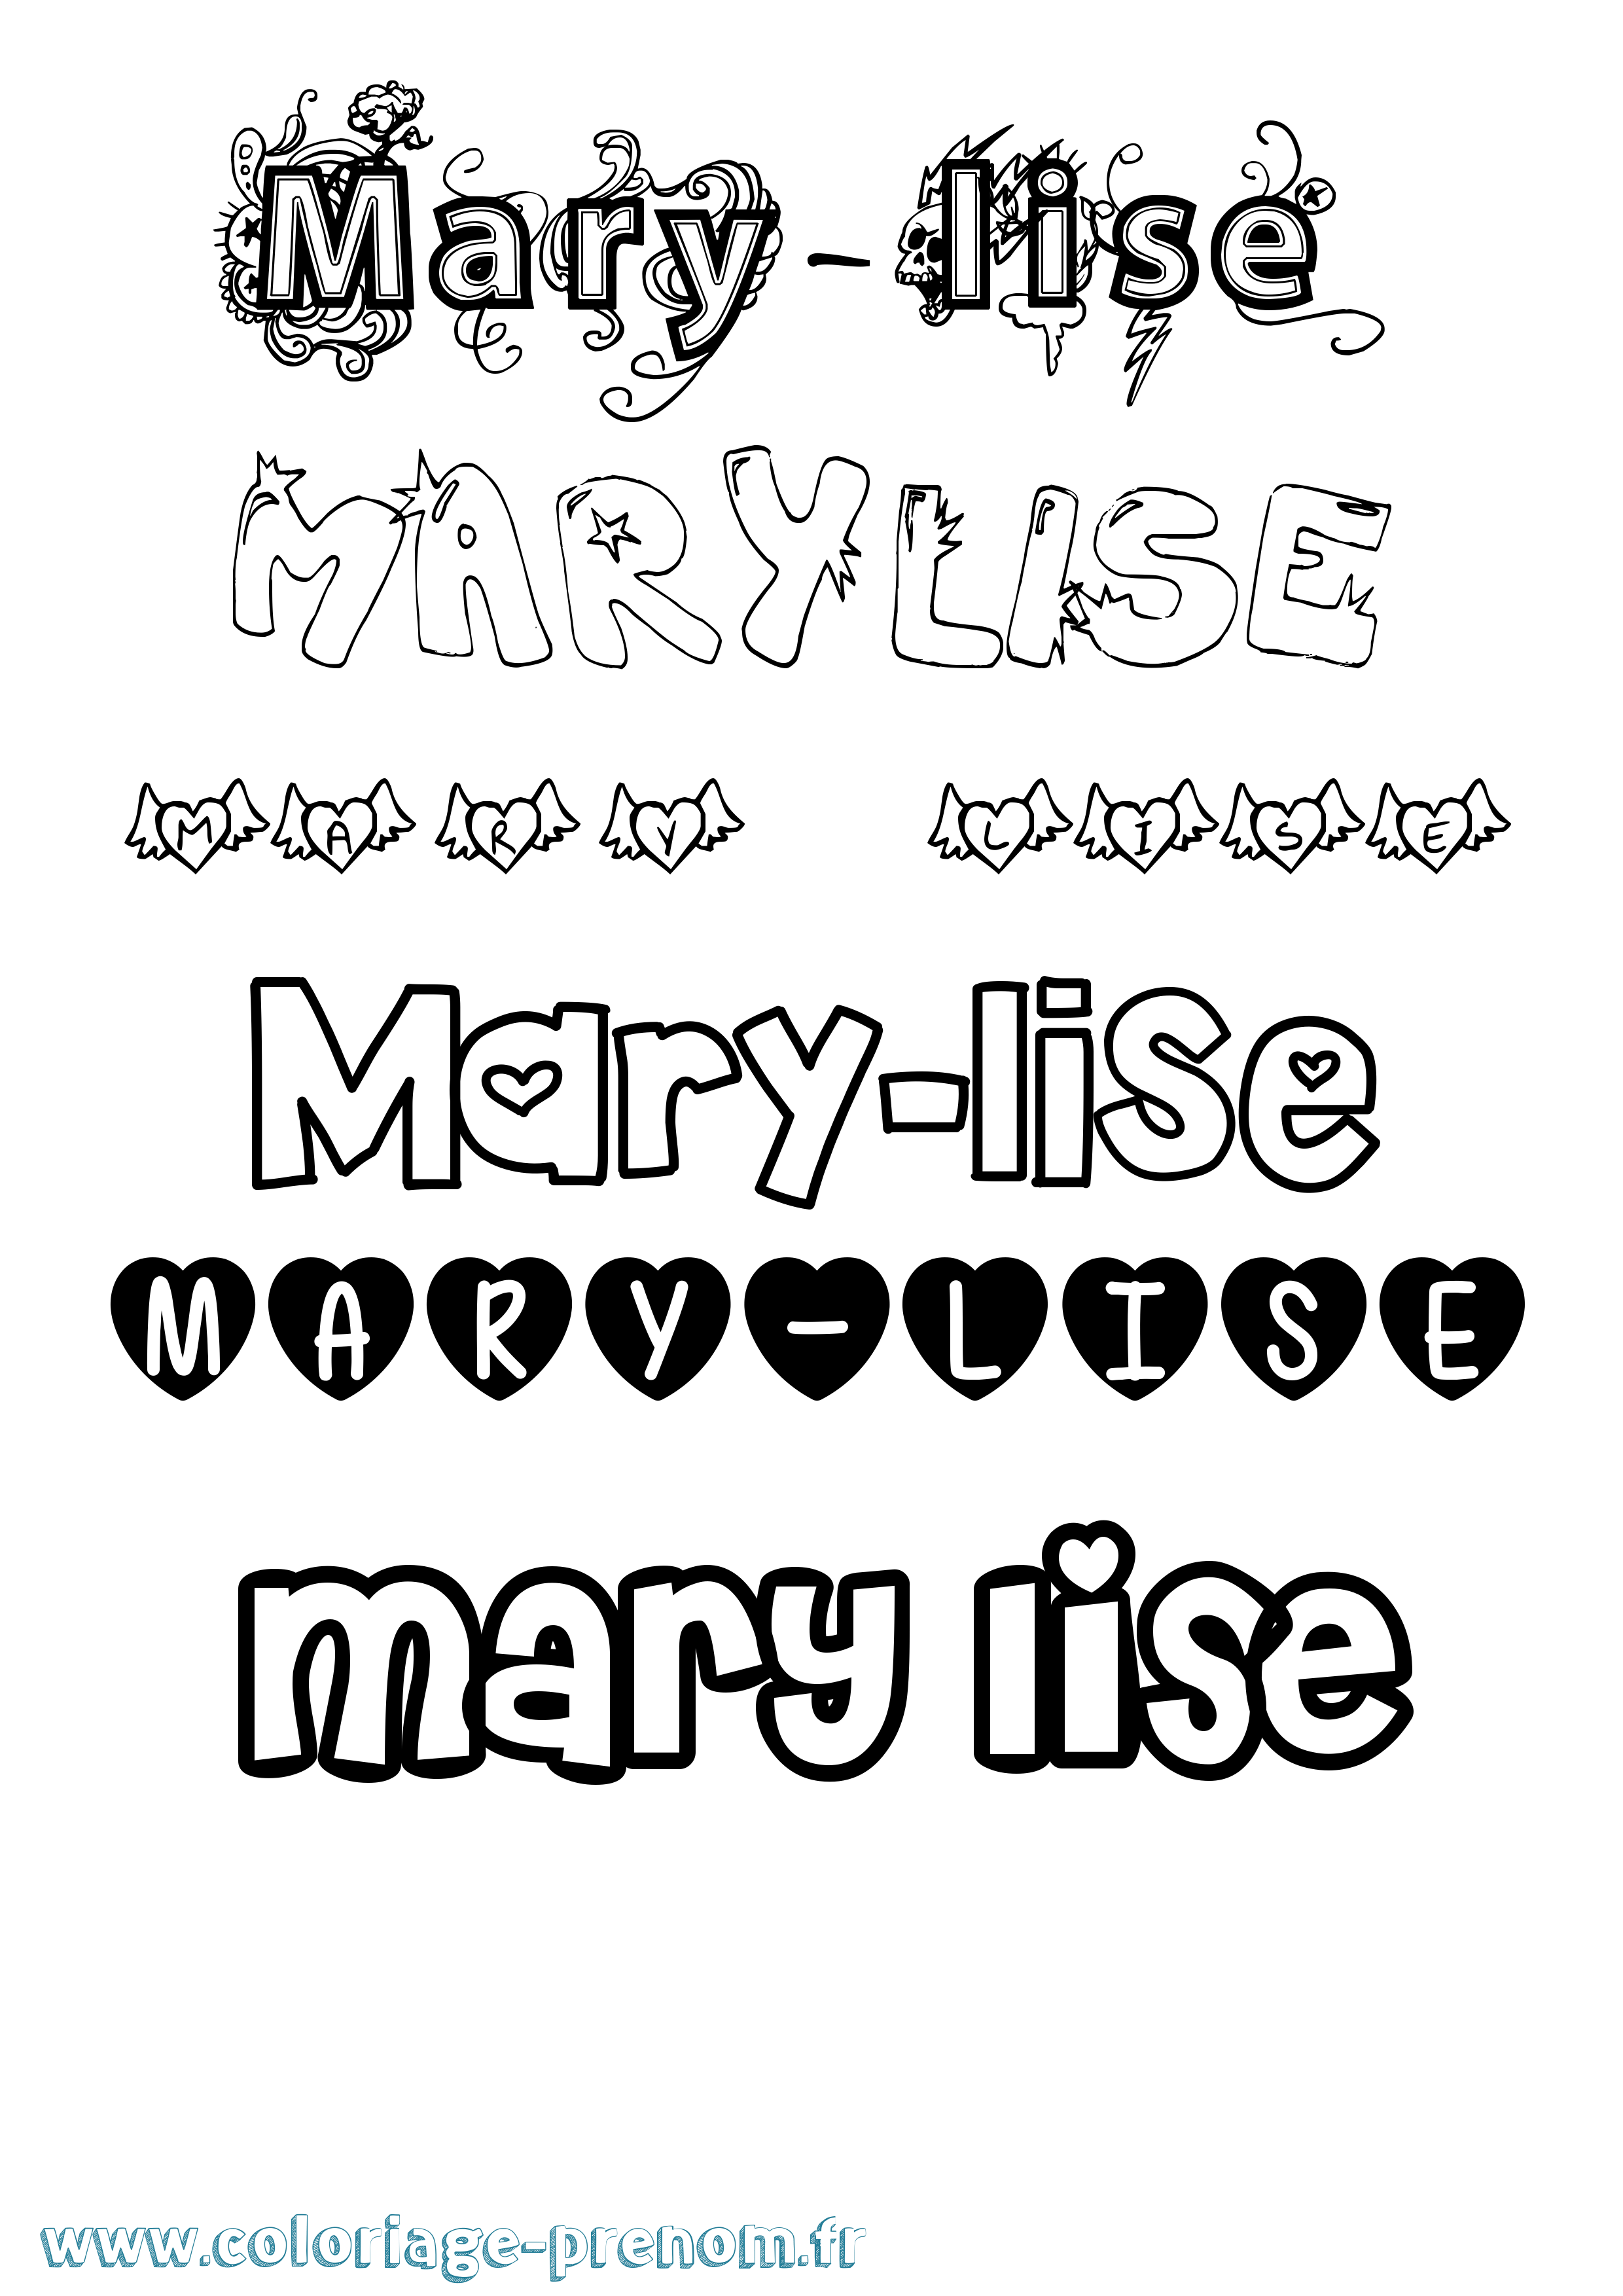 Coloriage prénom Mary-Lise Girly